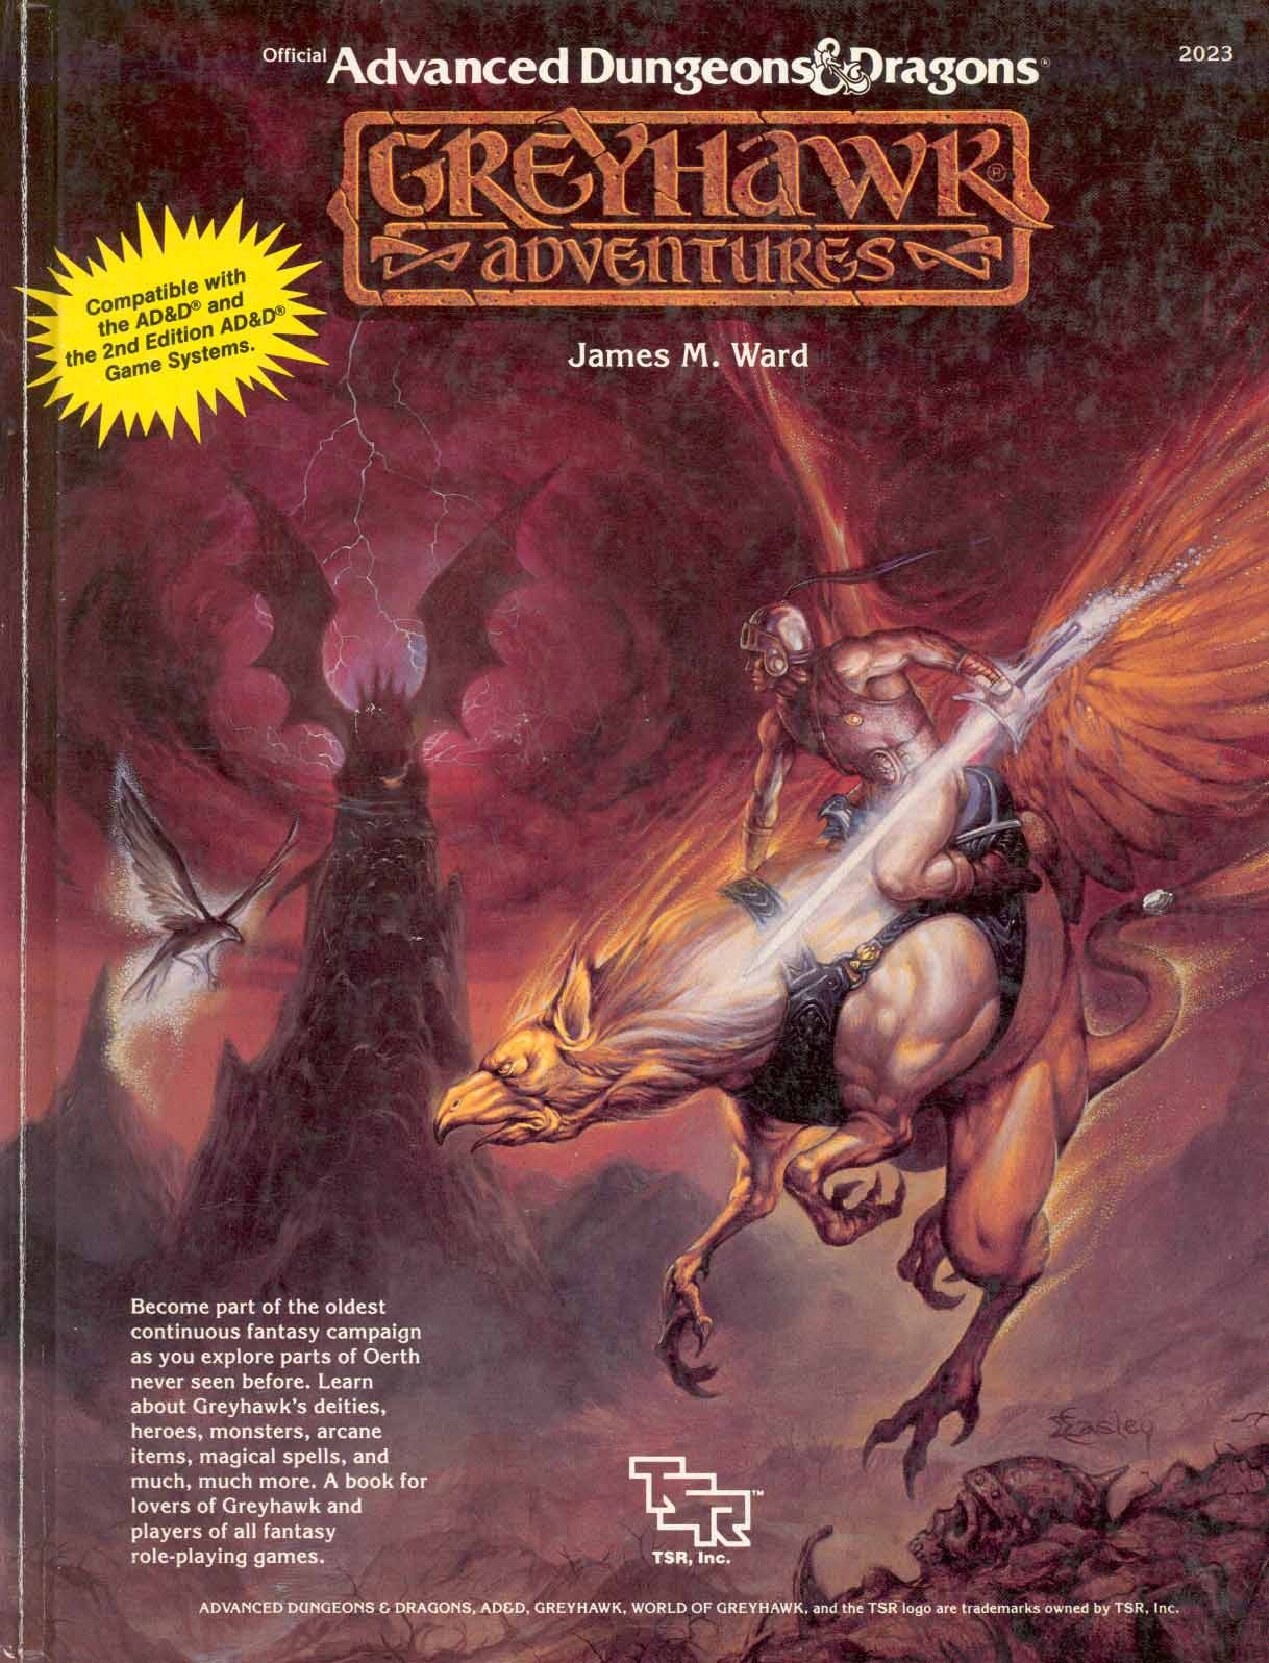 tsr02023 - Greyhawk Adventures hardcover